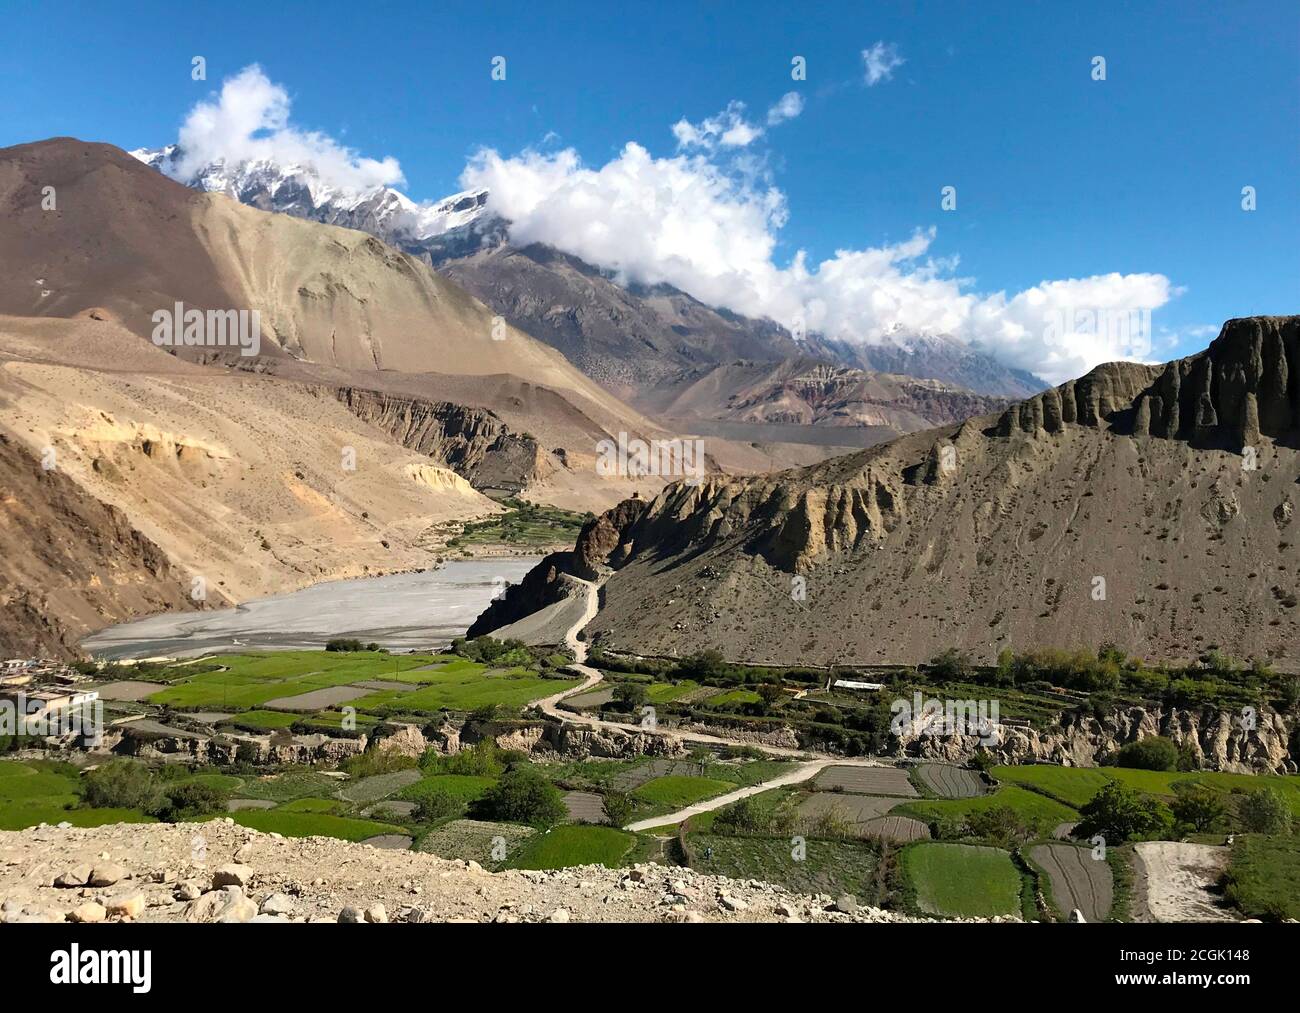 Malerische Aussicht auf Himalaya Berge, Mustang, Nepal. Grünes Kali Gandaki Tal. Spektakuläre tibetische Wildnis Landschaft. Annapurna. Felsige Landschaft. Stockfoto